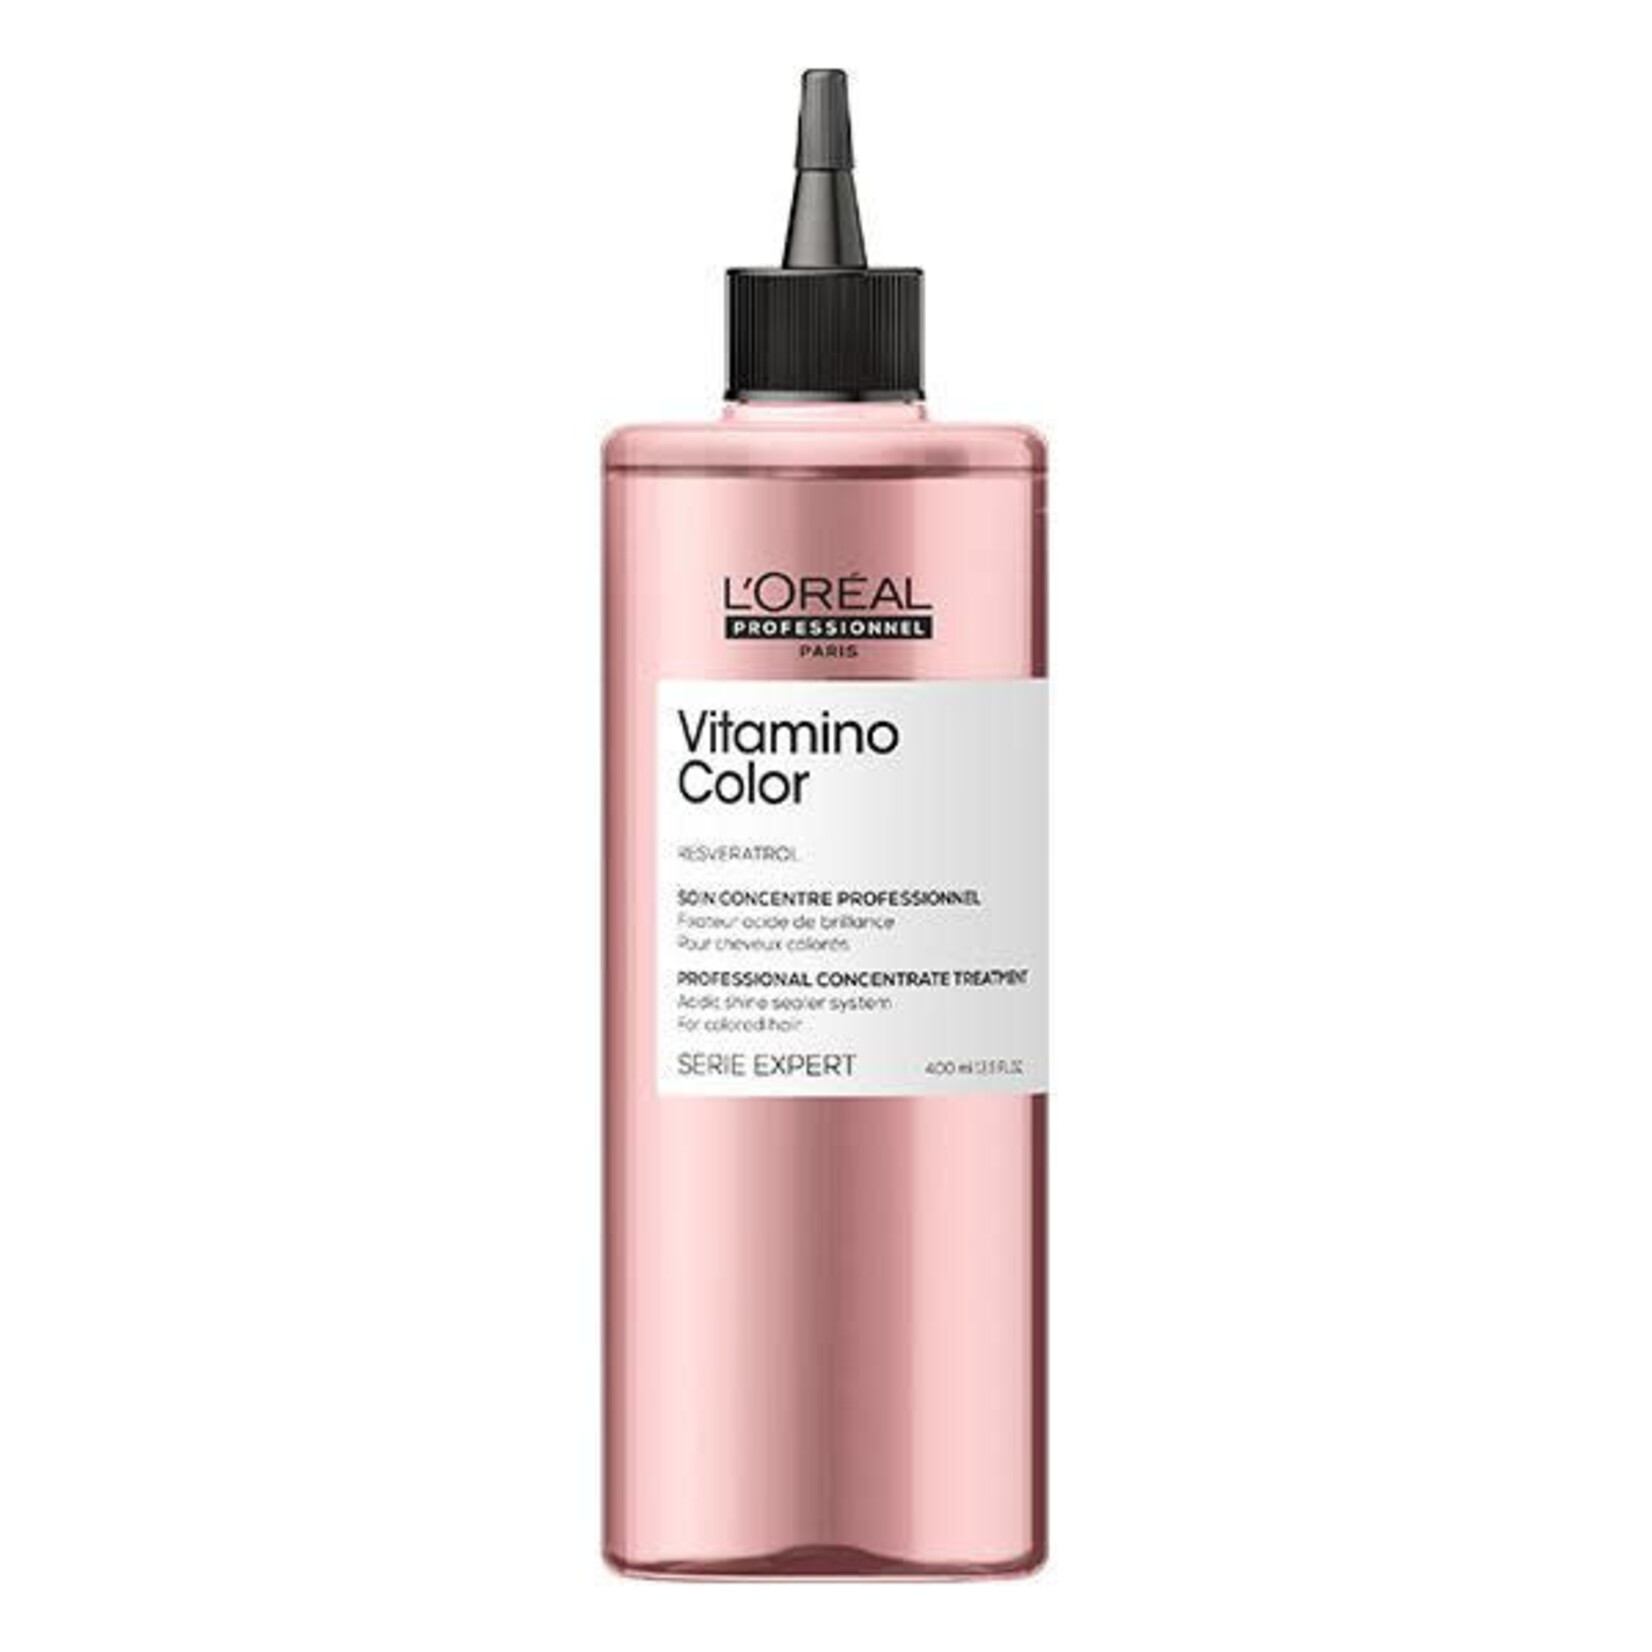 L'Oréal L'Oréal Professionnel - Vitamino Color - Acidic Sealer Treatment 210ml